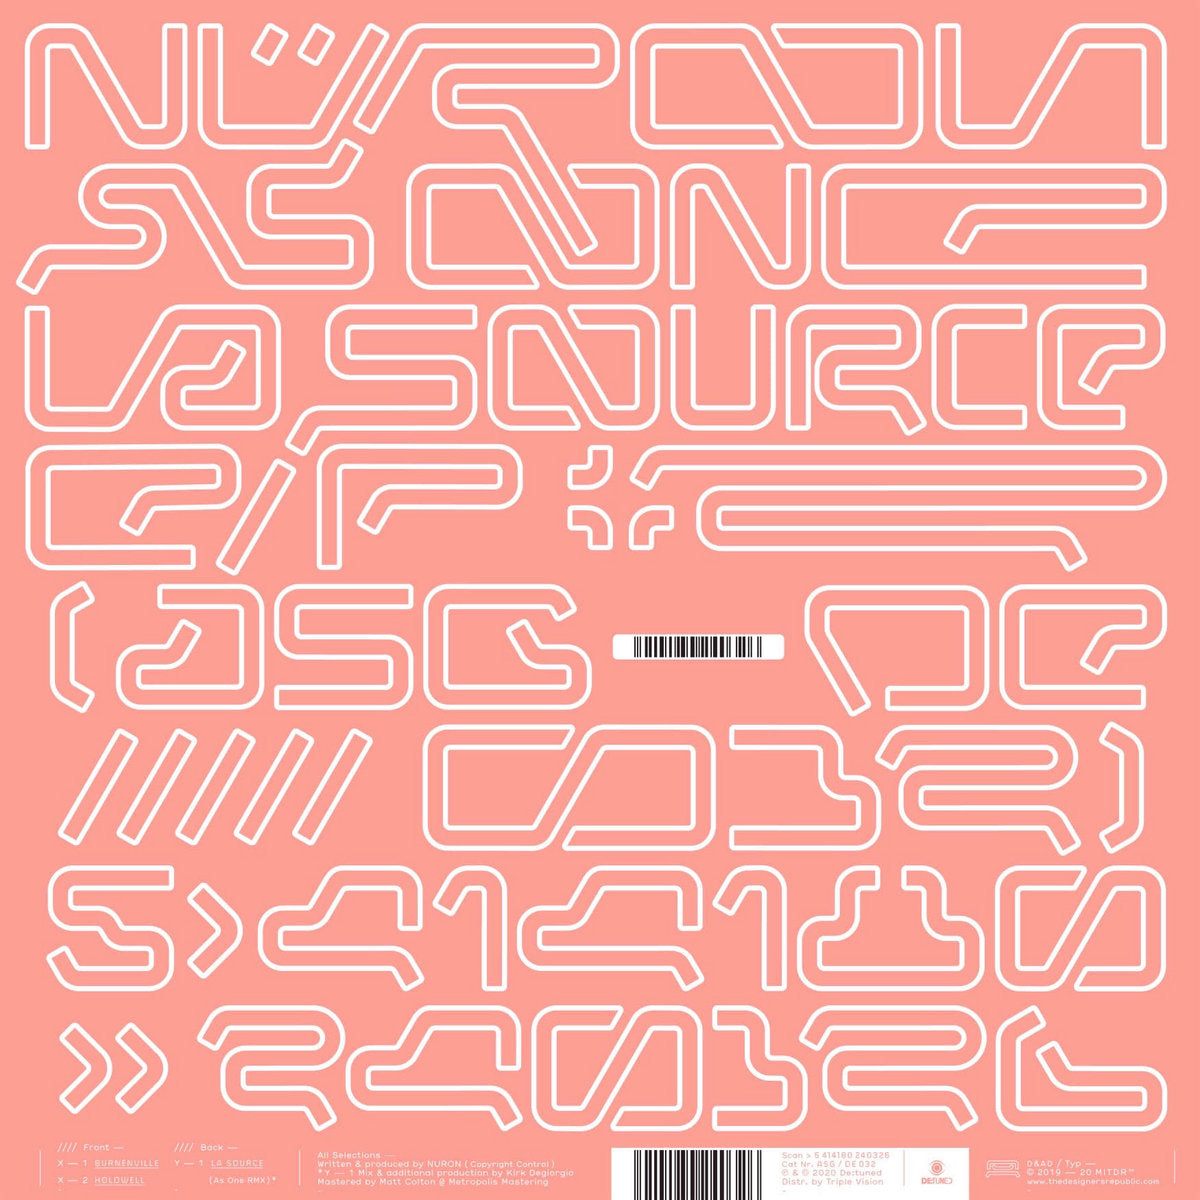 Nuron – La Source EP #2